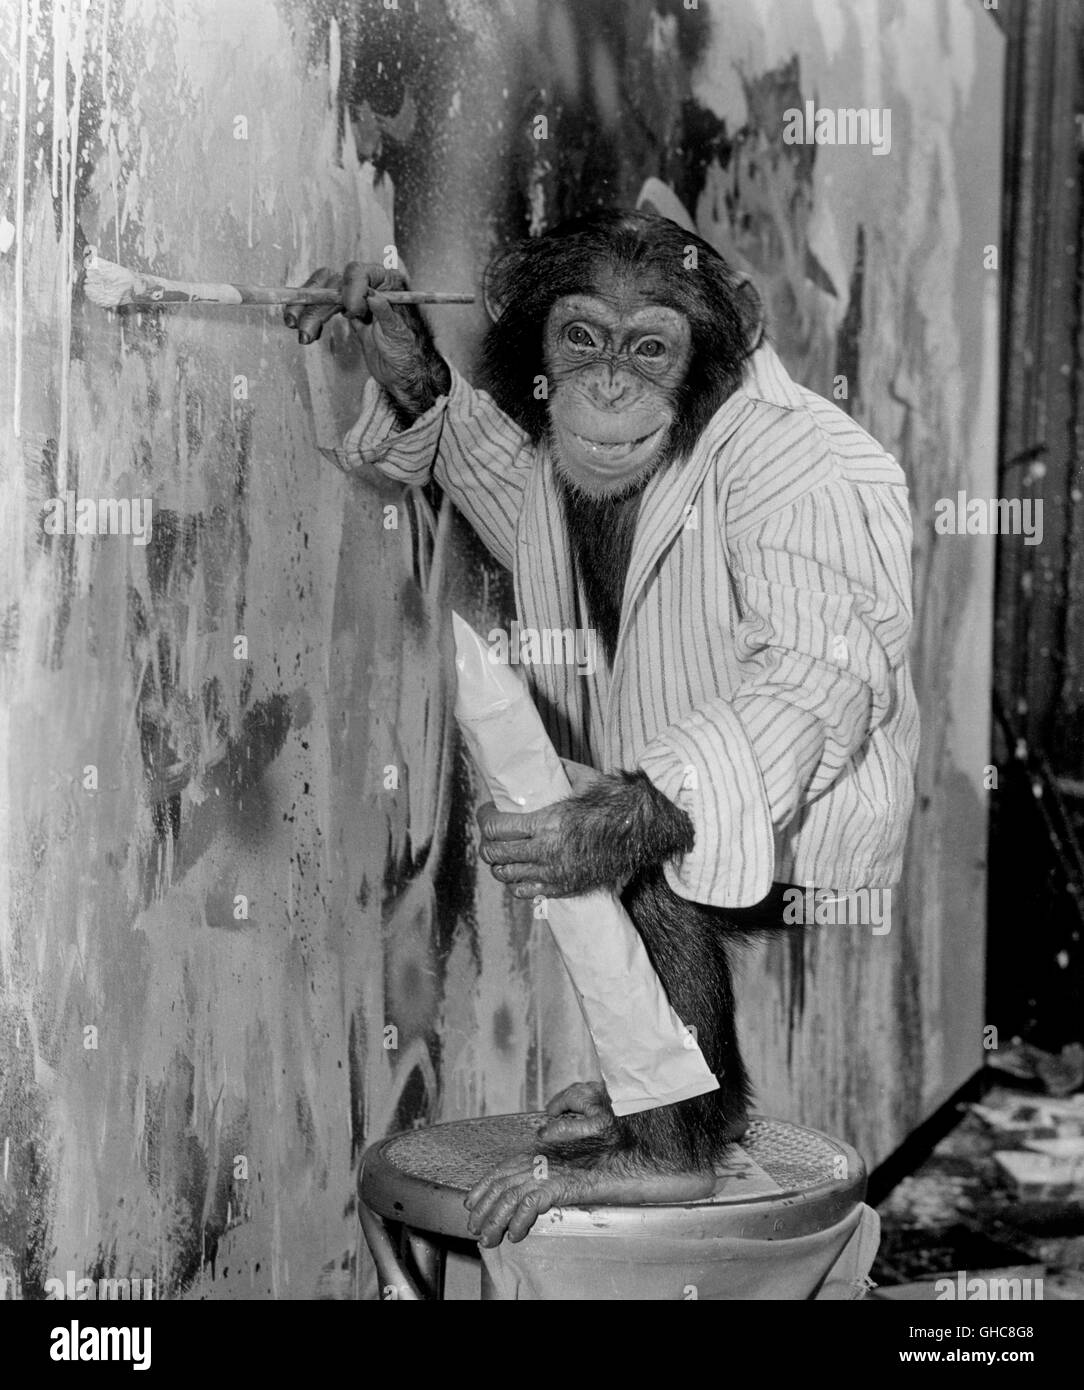 WHAT A WAY TO GO! What a Way to Go USA 1964 J. Lee Thompson Schimpanse als Maler, painting chimpanzee Regie: J. Lee Thompson aka. What a Way to Go Stock Photo